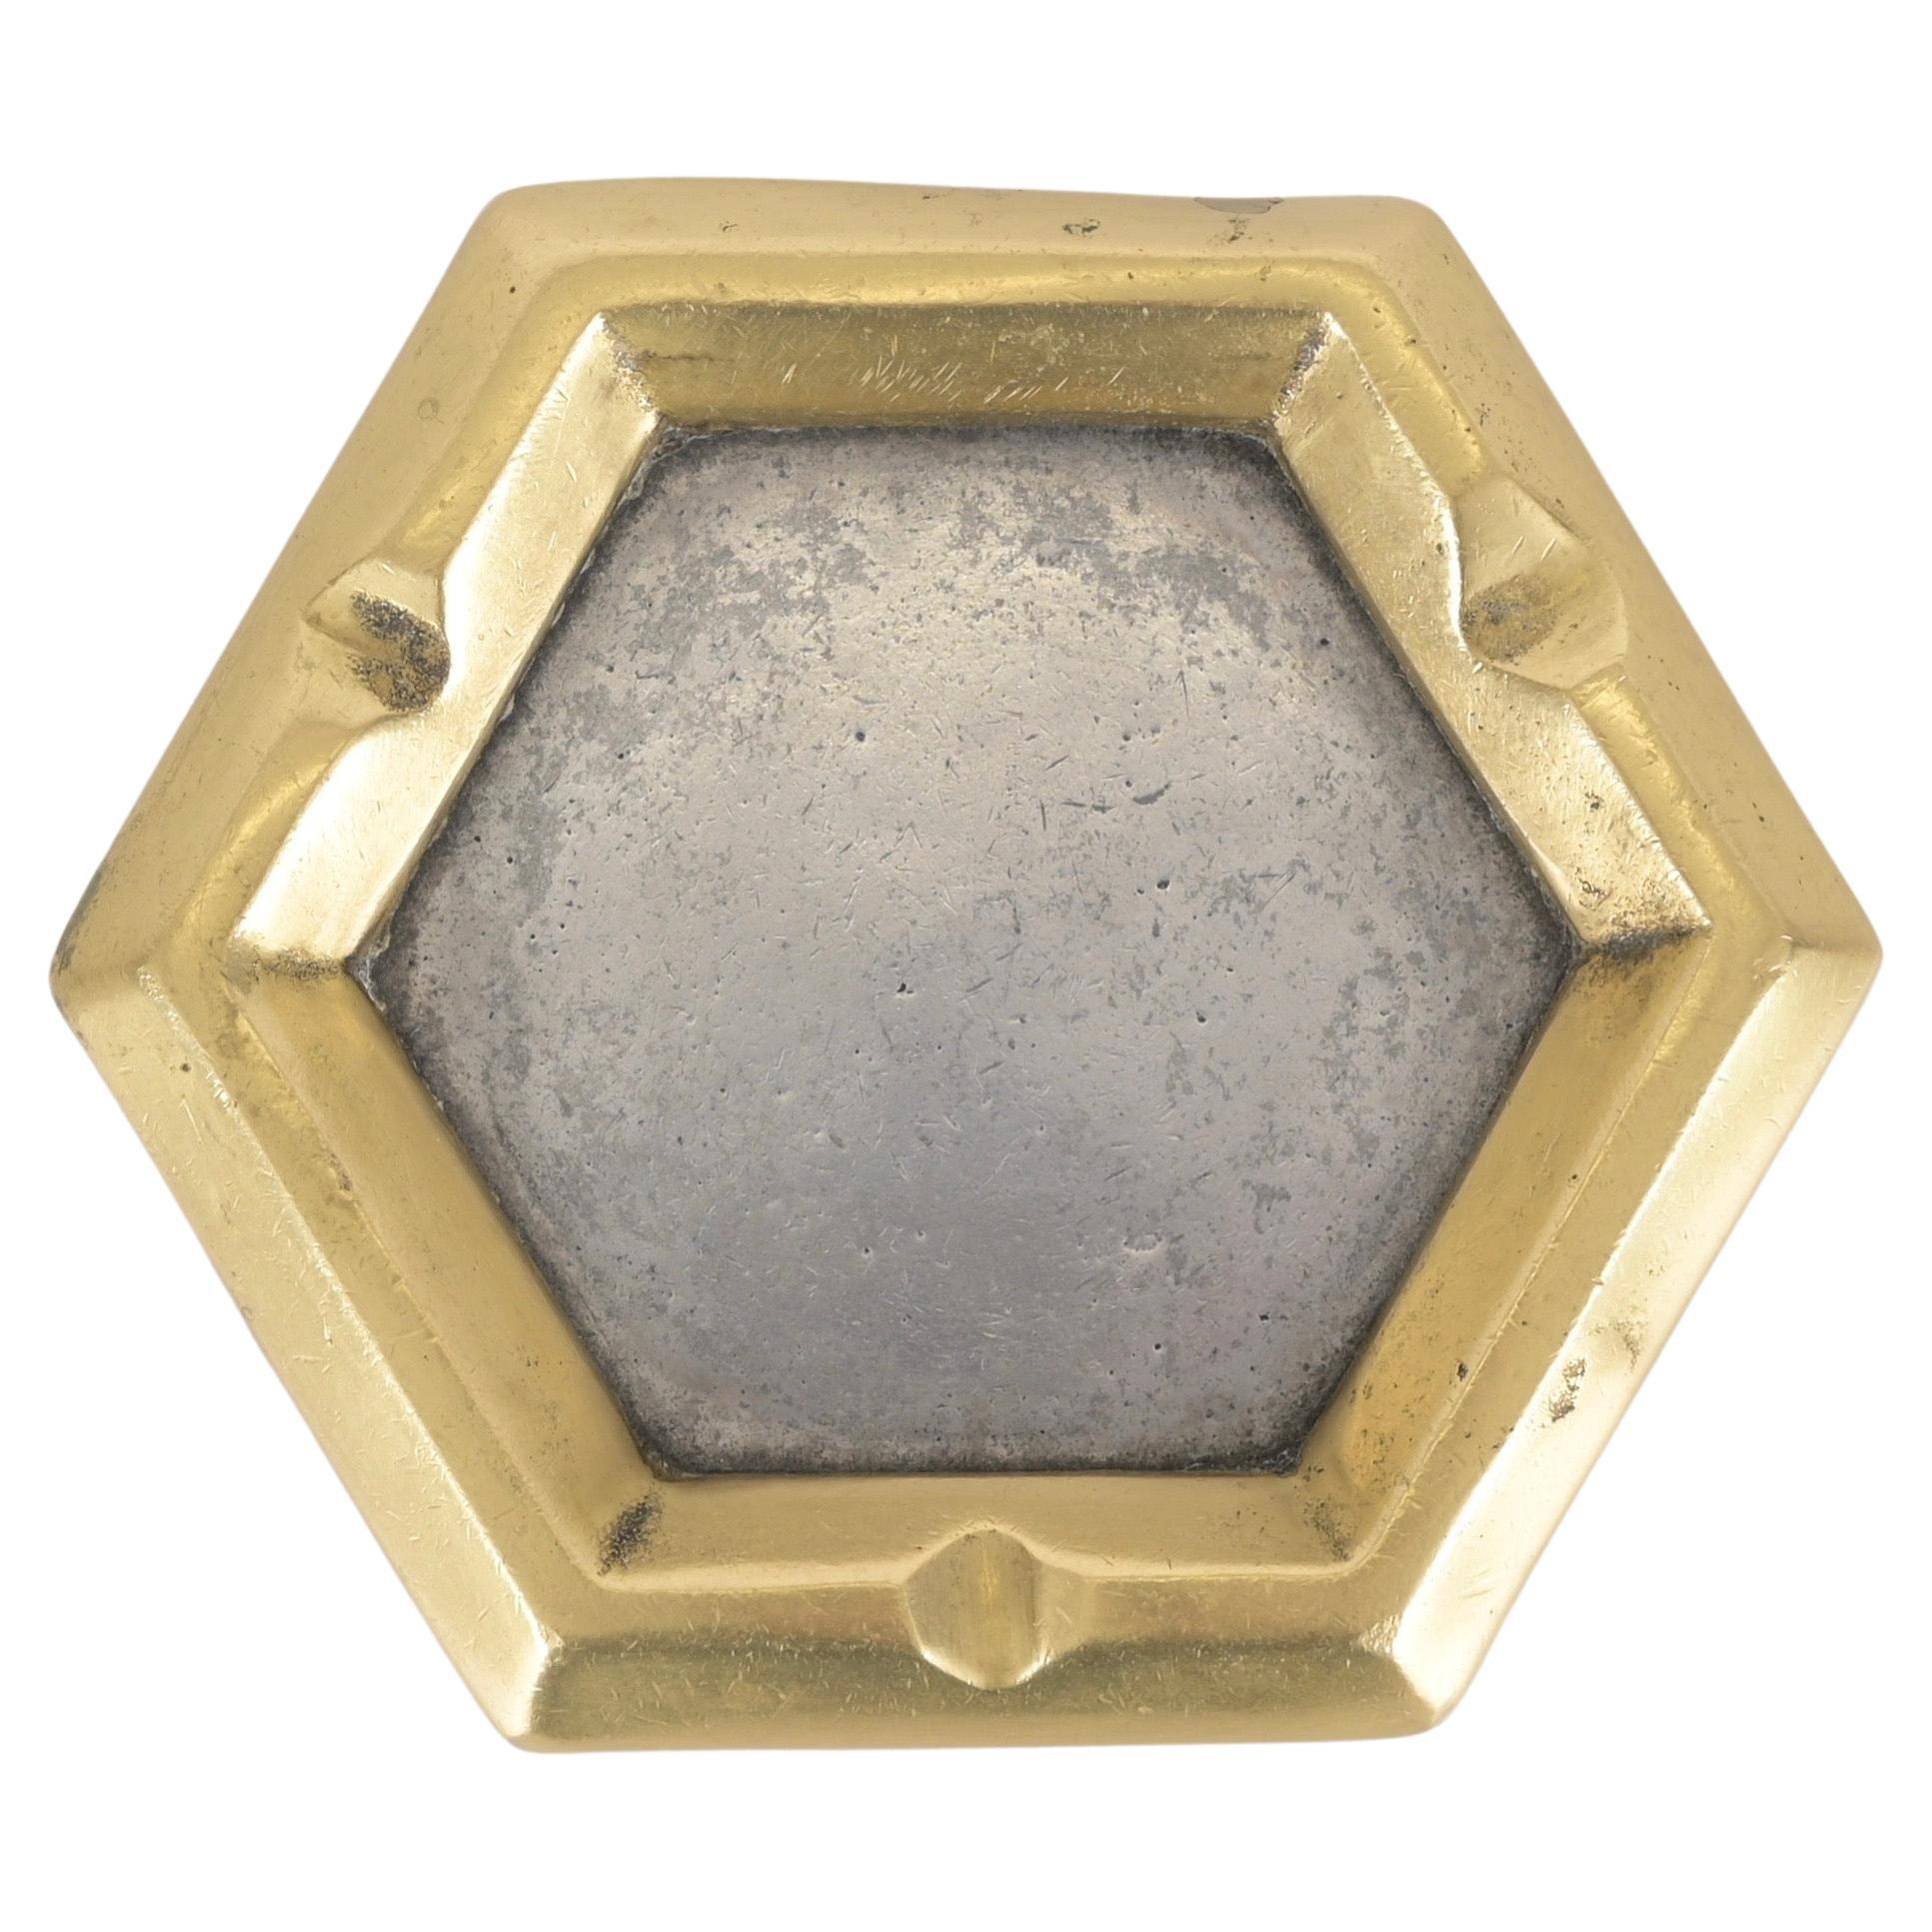 David Marshall hexagonal ashtray in cast brass and aluminum from the 1970s